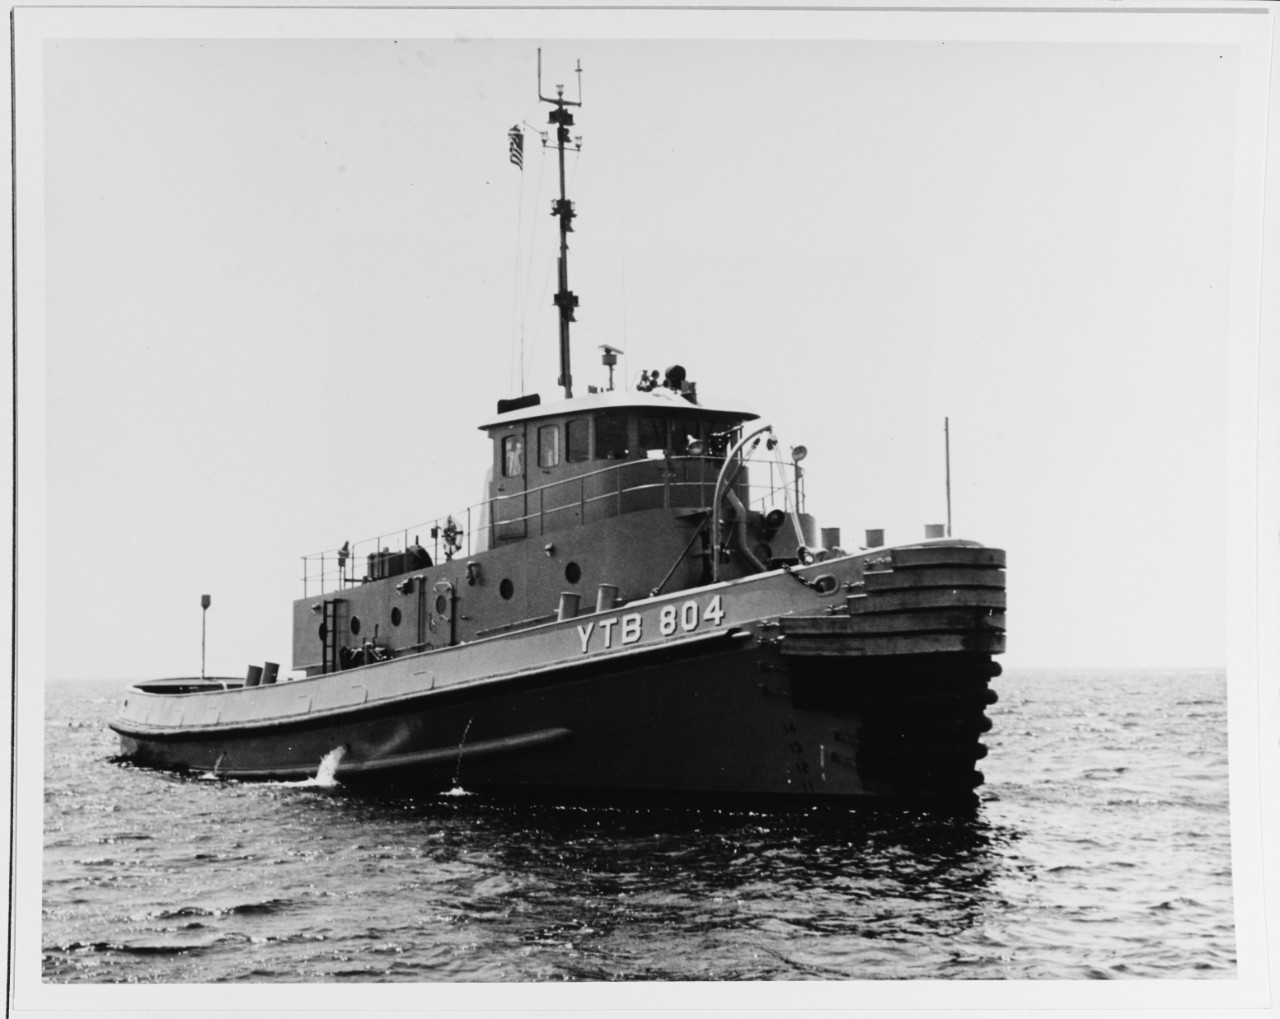 USS AHOSKIE (YTB-804)